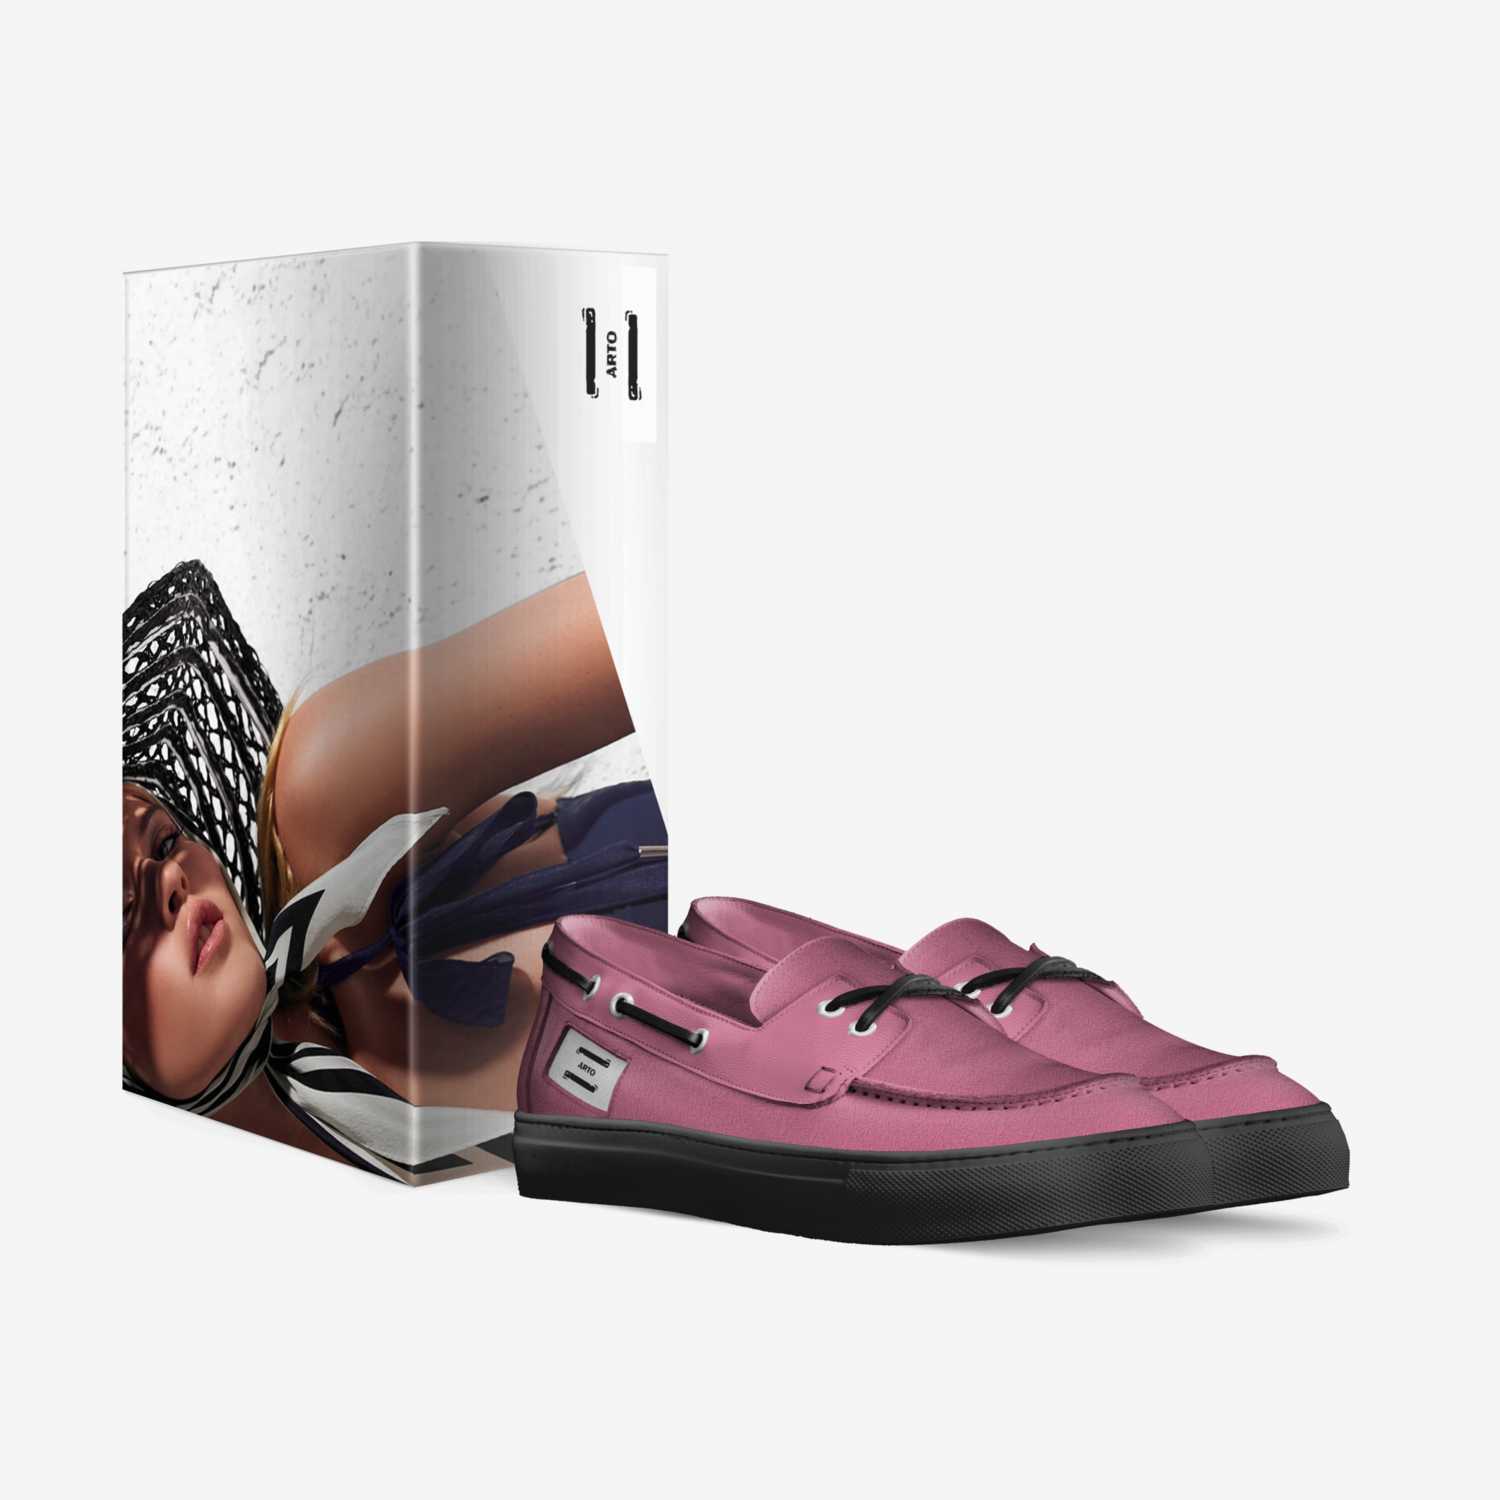 ARTO custom made in Italy shoes by Fortunate Mahlangu | Box view